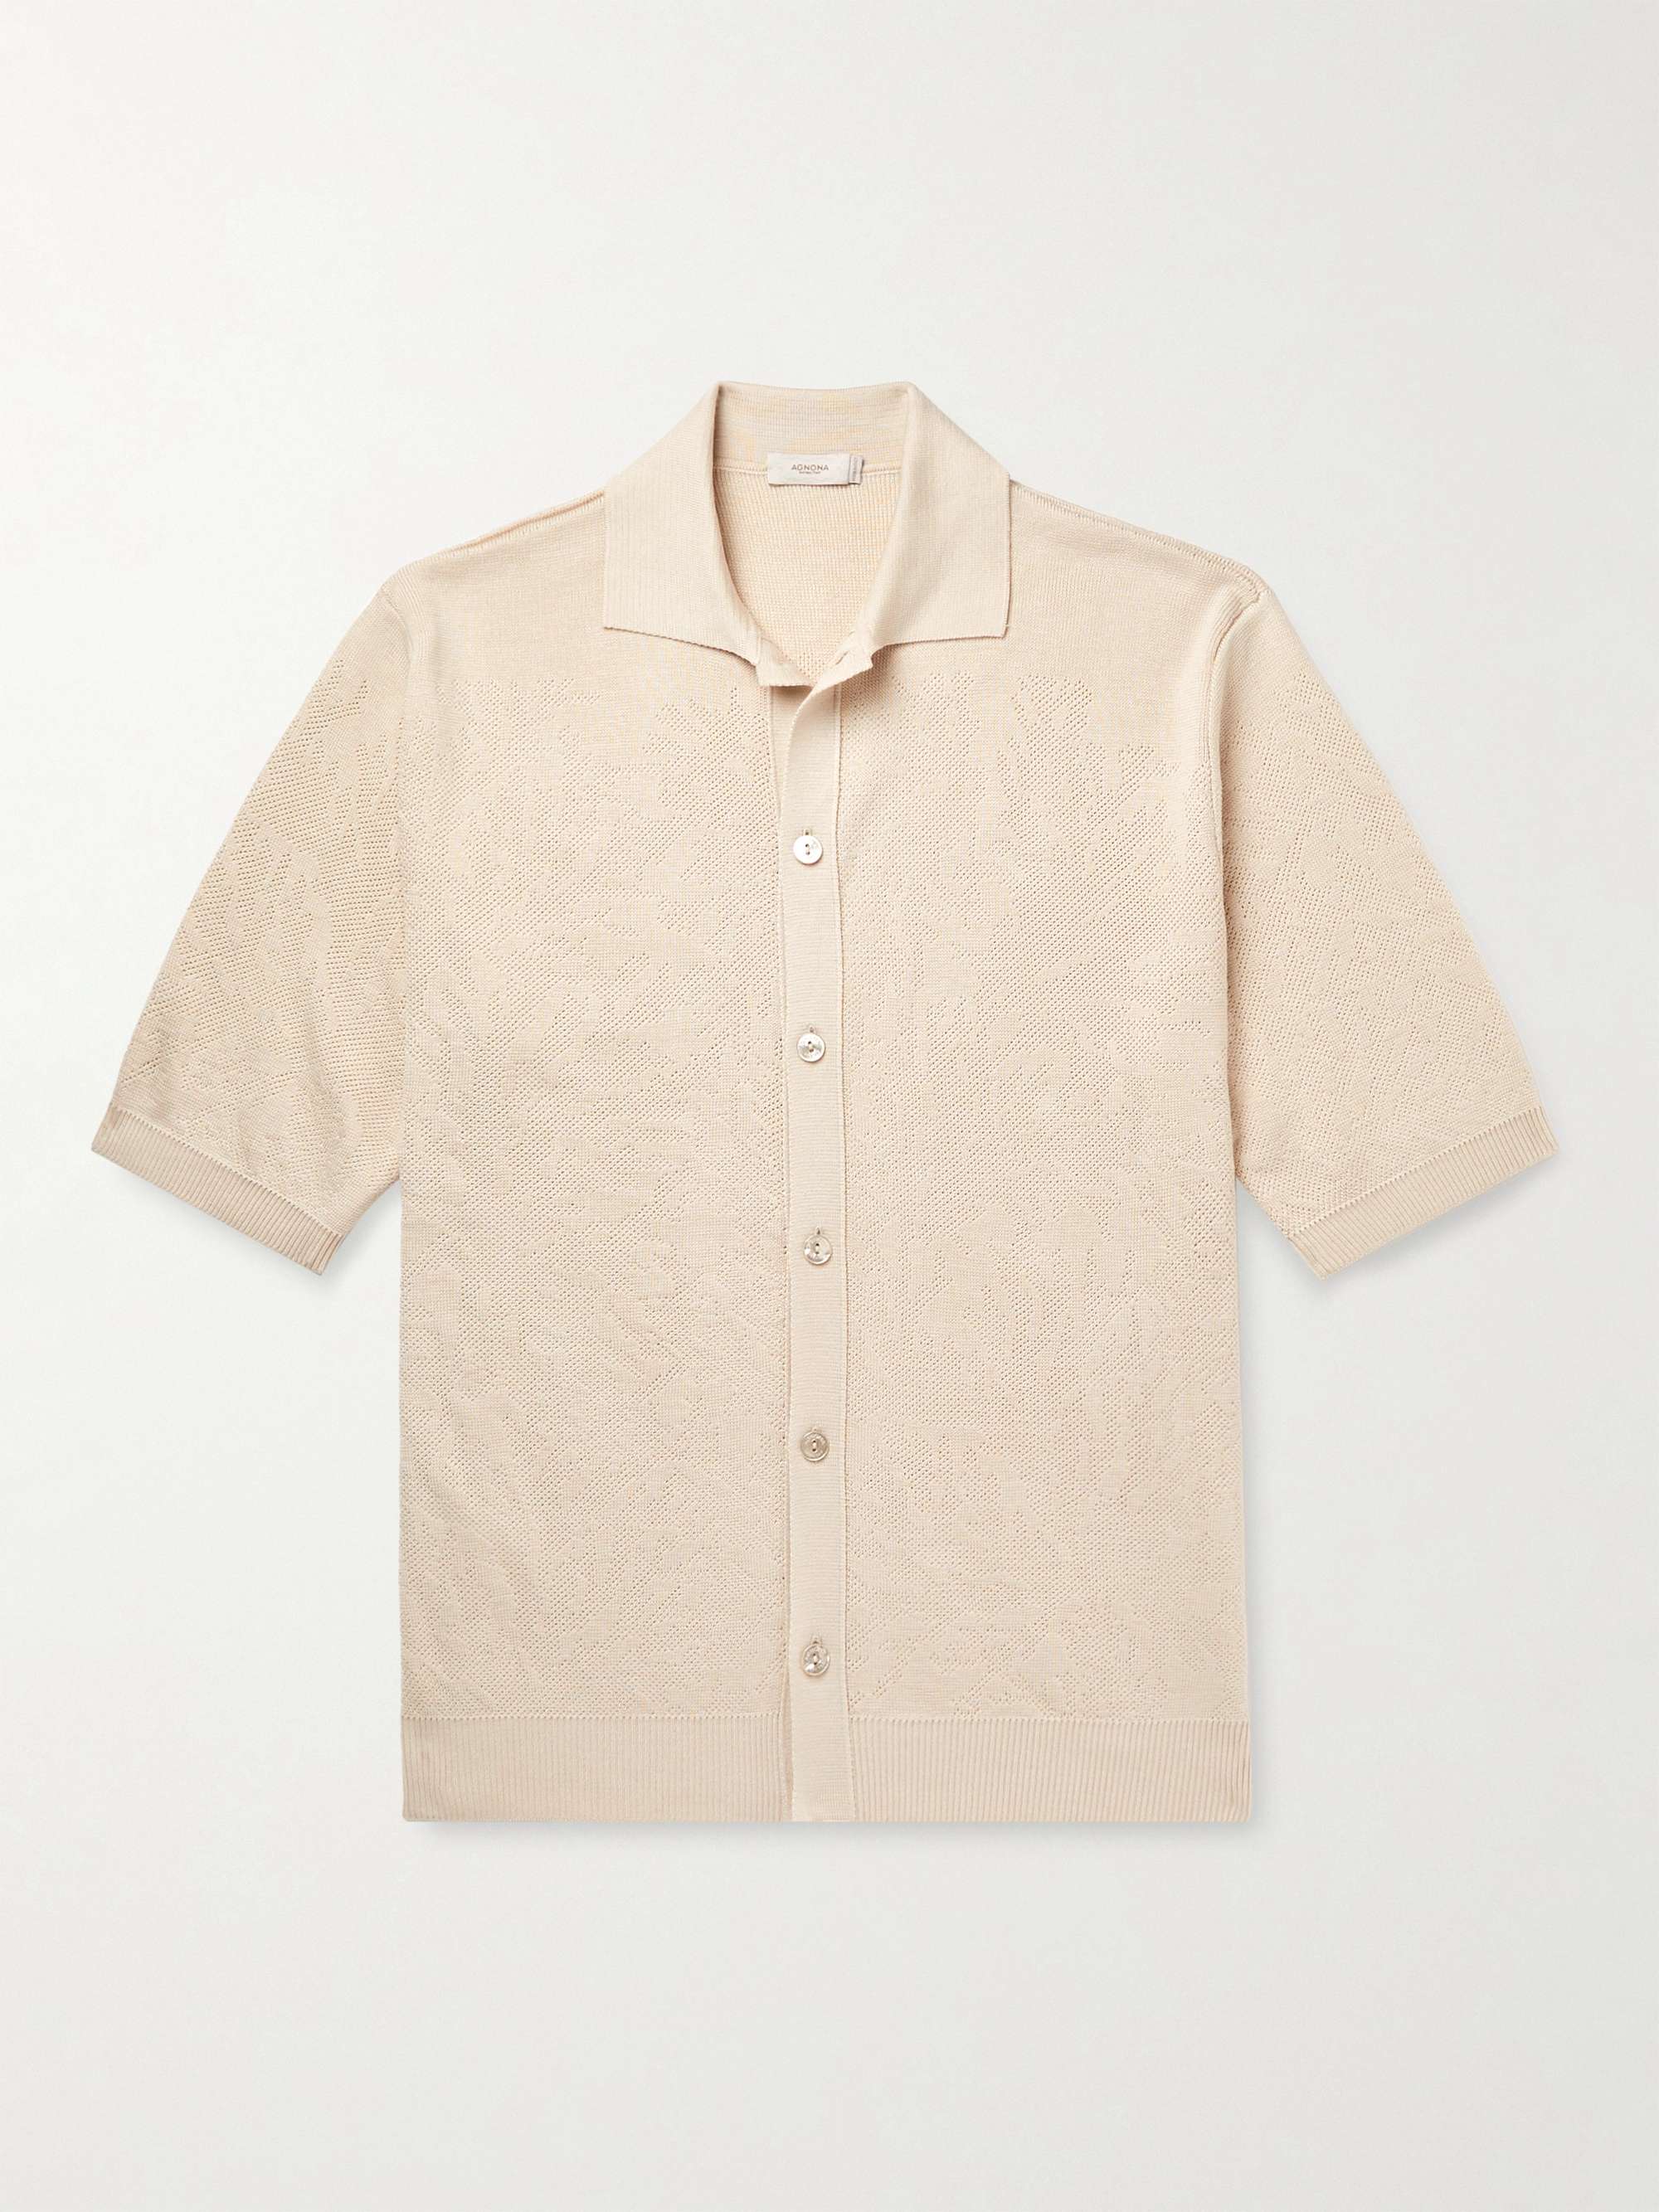 AGNONA Silk and Cotton-Blend Jacquard Shirt